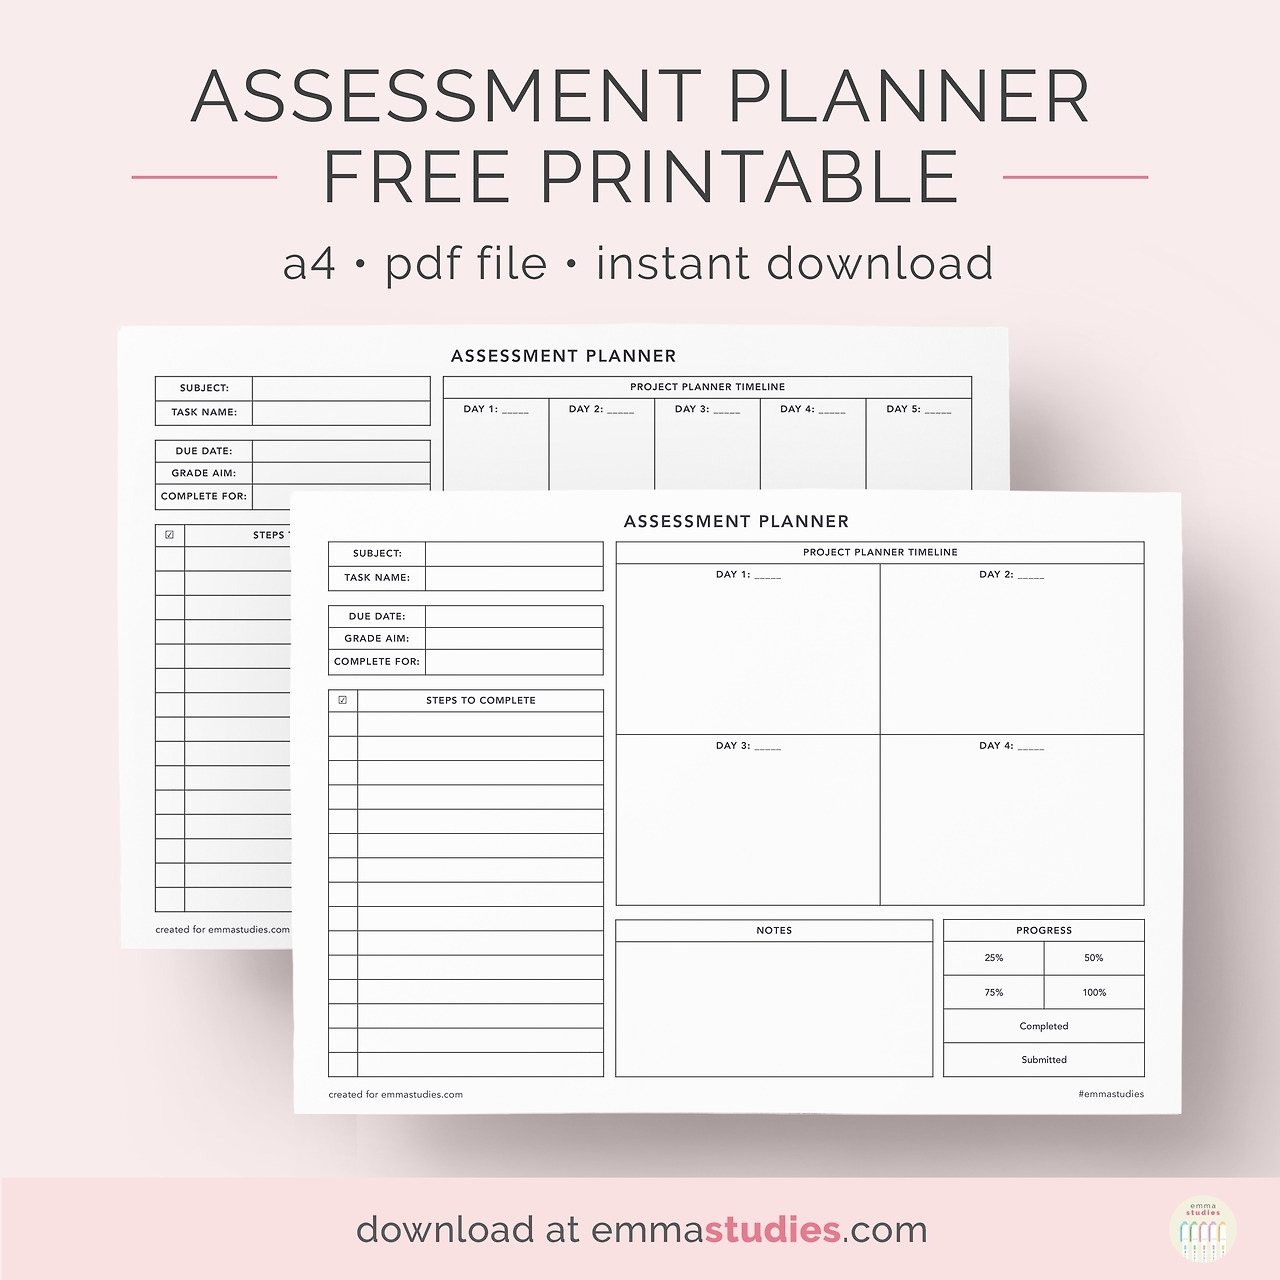 Emma&#039;s Studyblr — Assessment Timeline Planner Free Printable inside Free Blank Day Planner With A Timeline